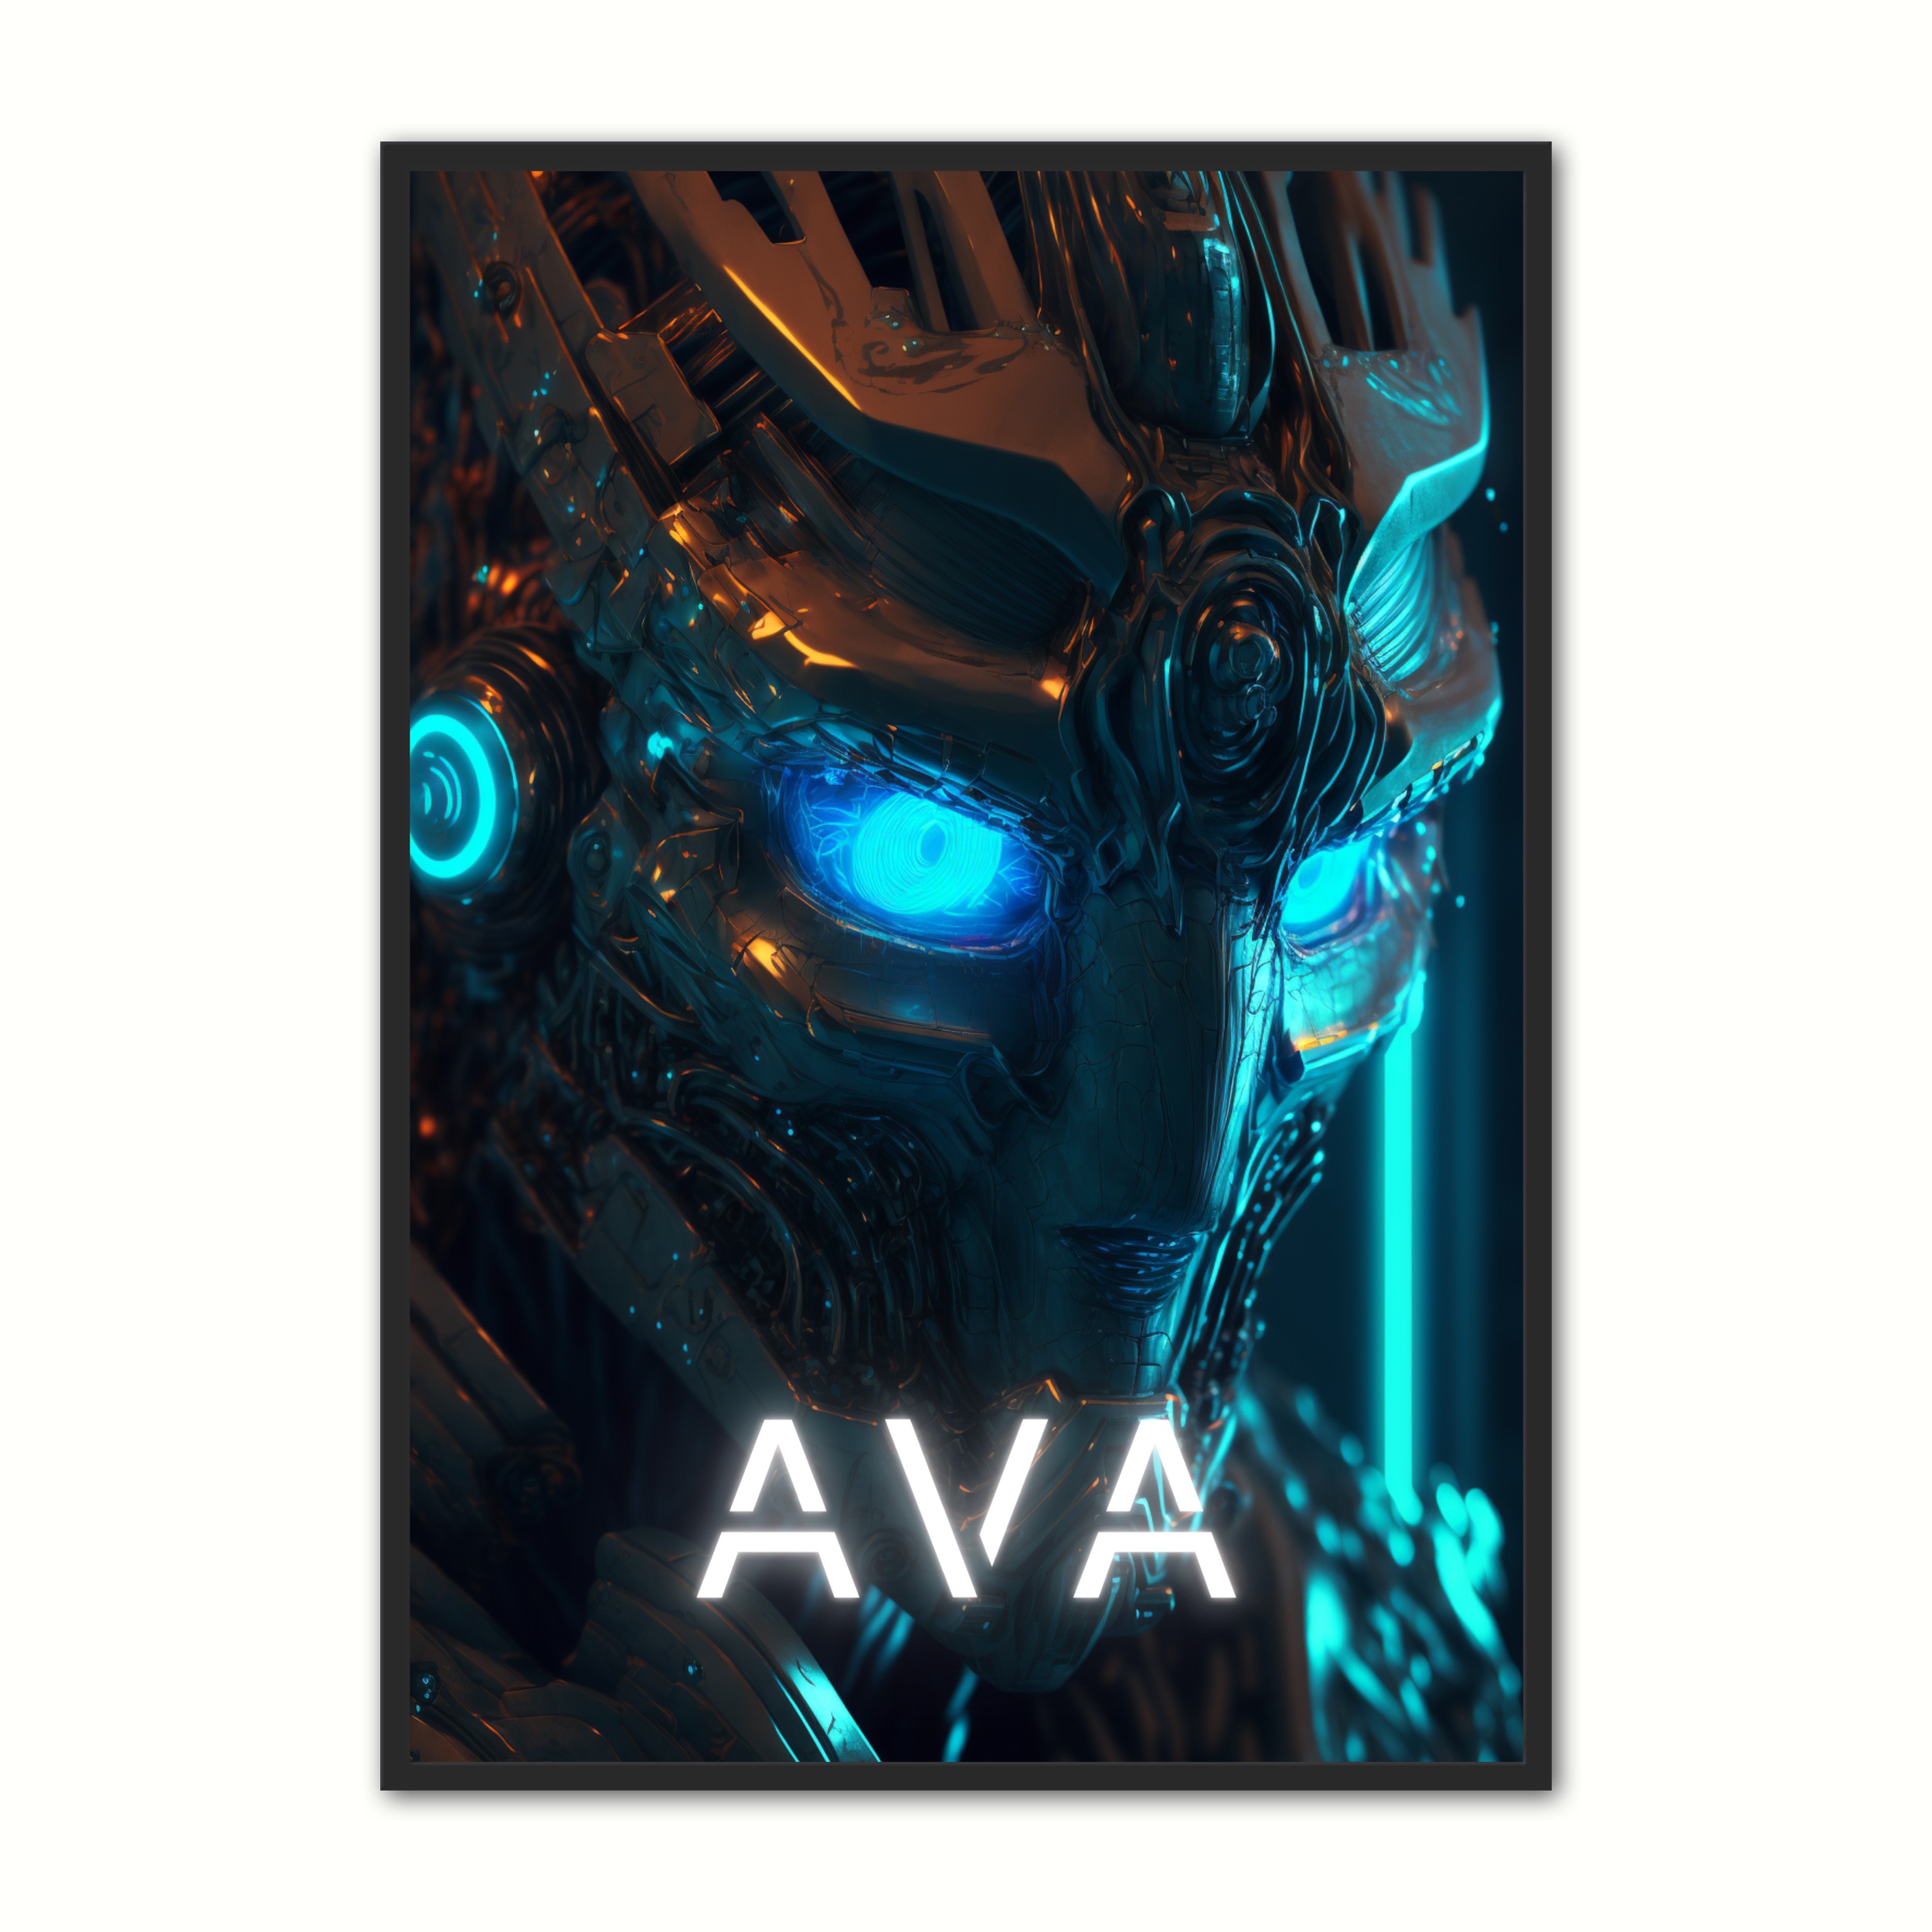 Se Plakat med Ava - Android 21 x 29,7 cm (A4) hos Nyplakat.dk